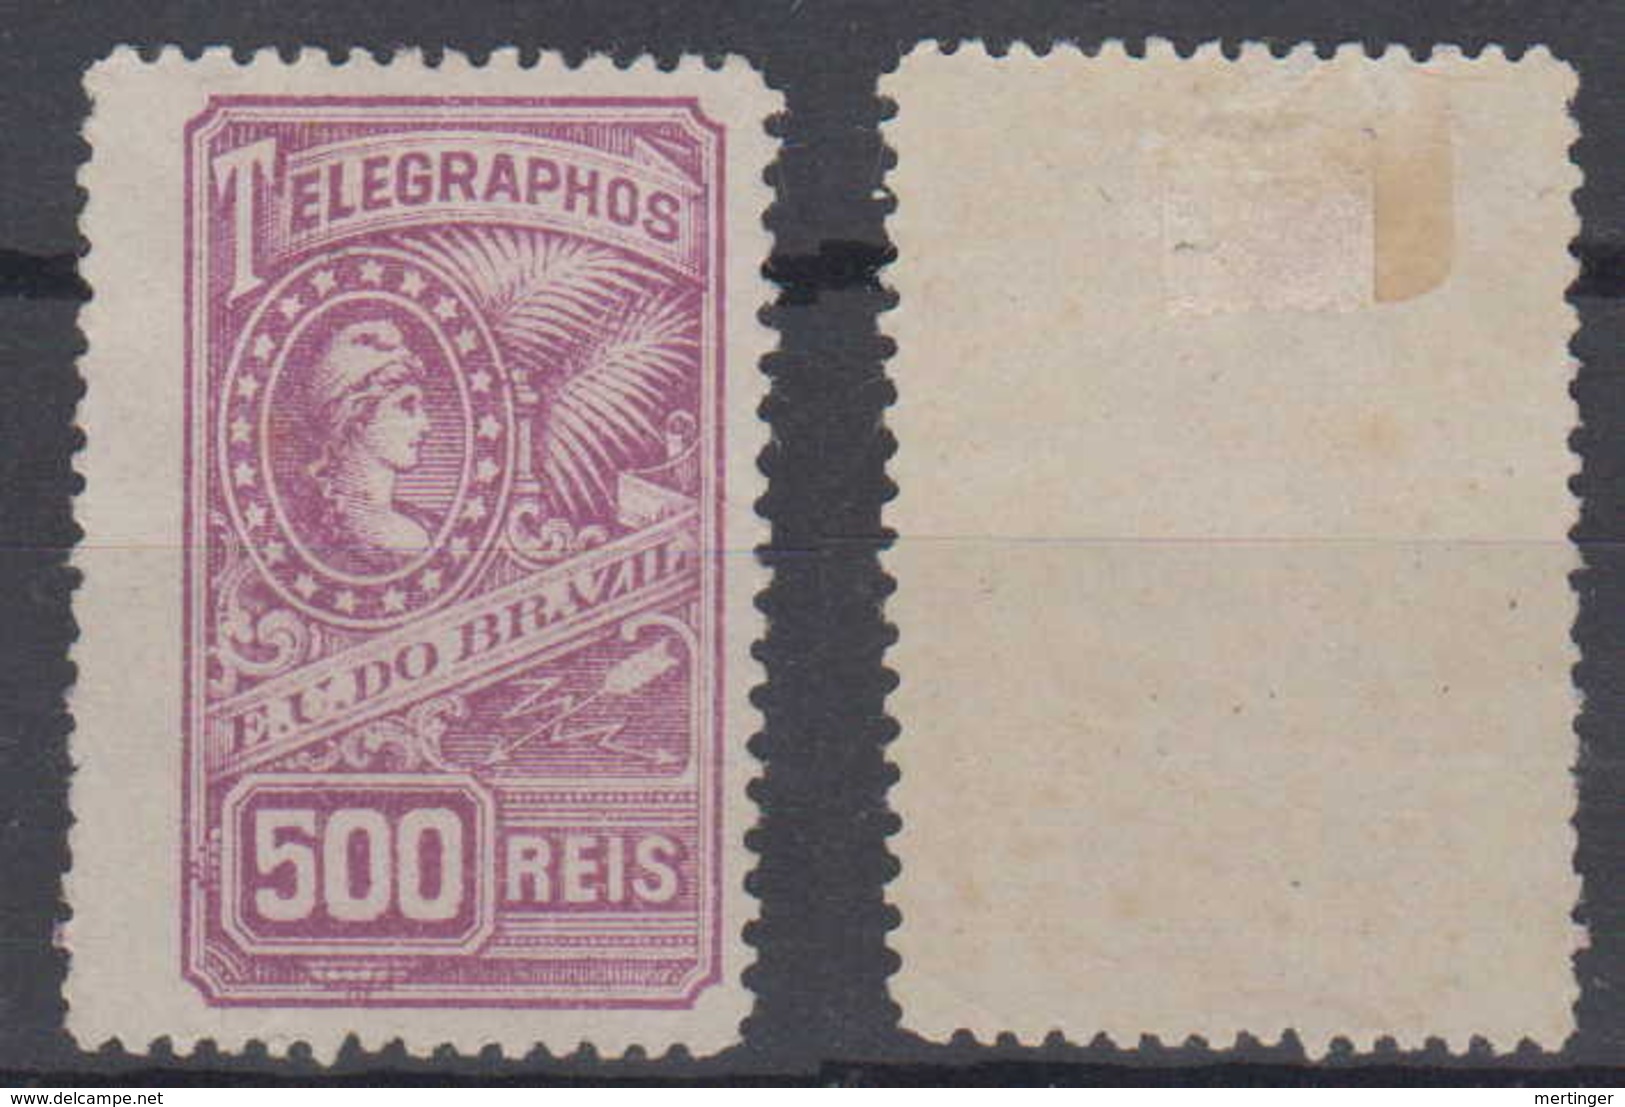 Brazil Brasil Telegrafo Telegraph 1899 500R * Mint - Telegraph